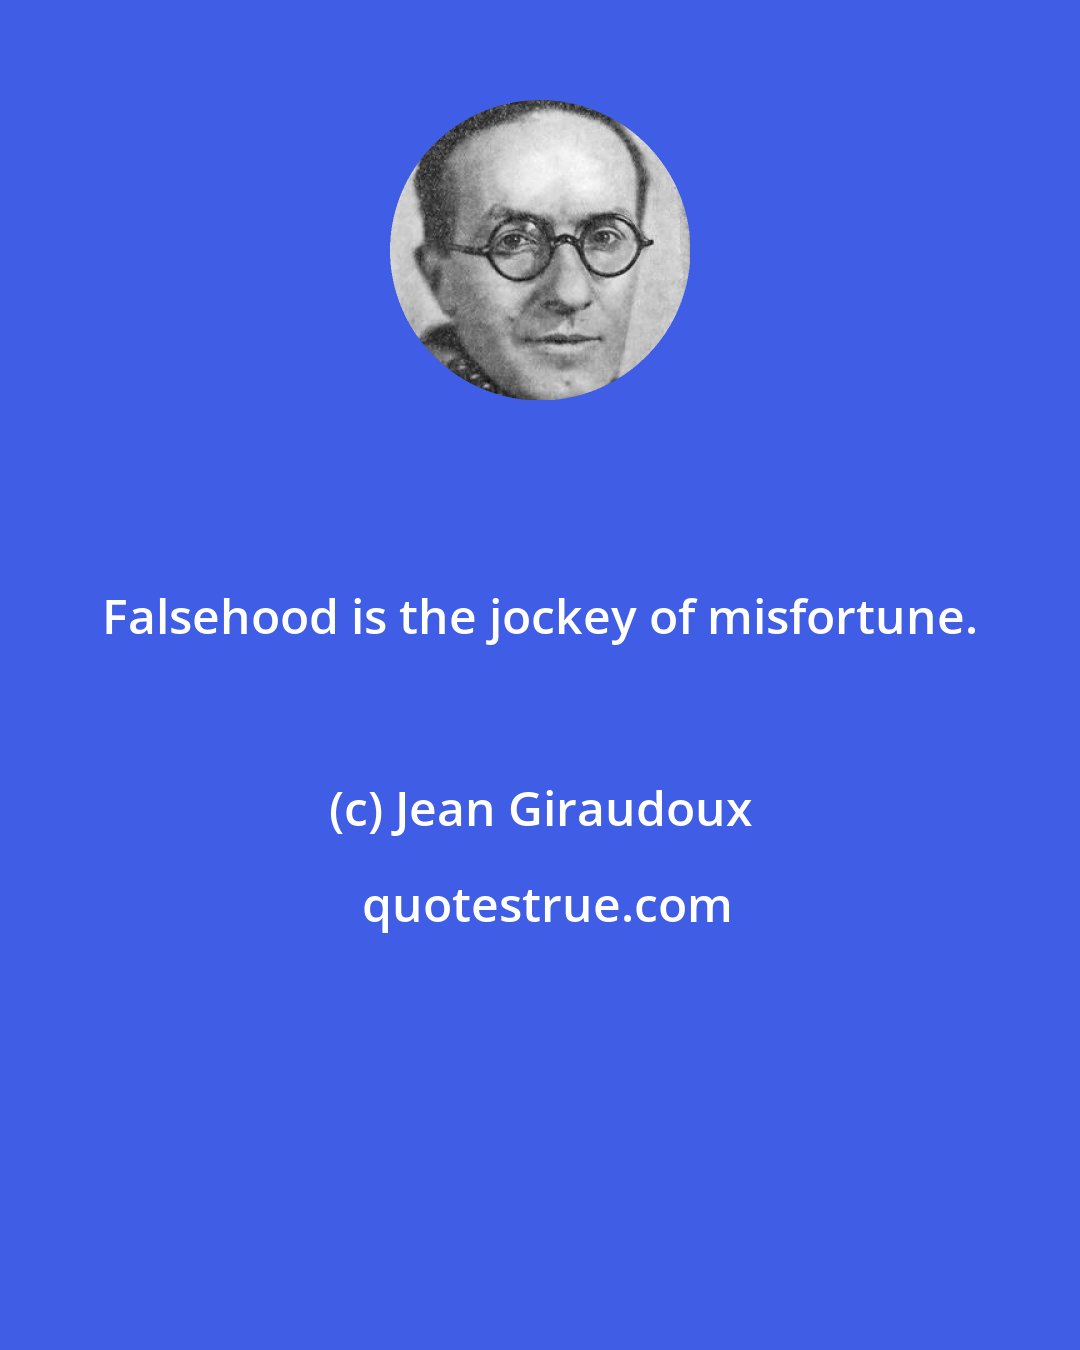 Jean Giraudoux: Falsehood is the jockey of misfortune.